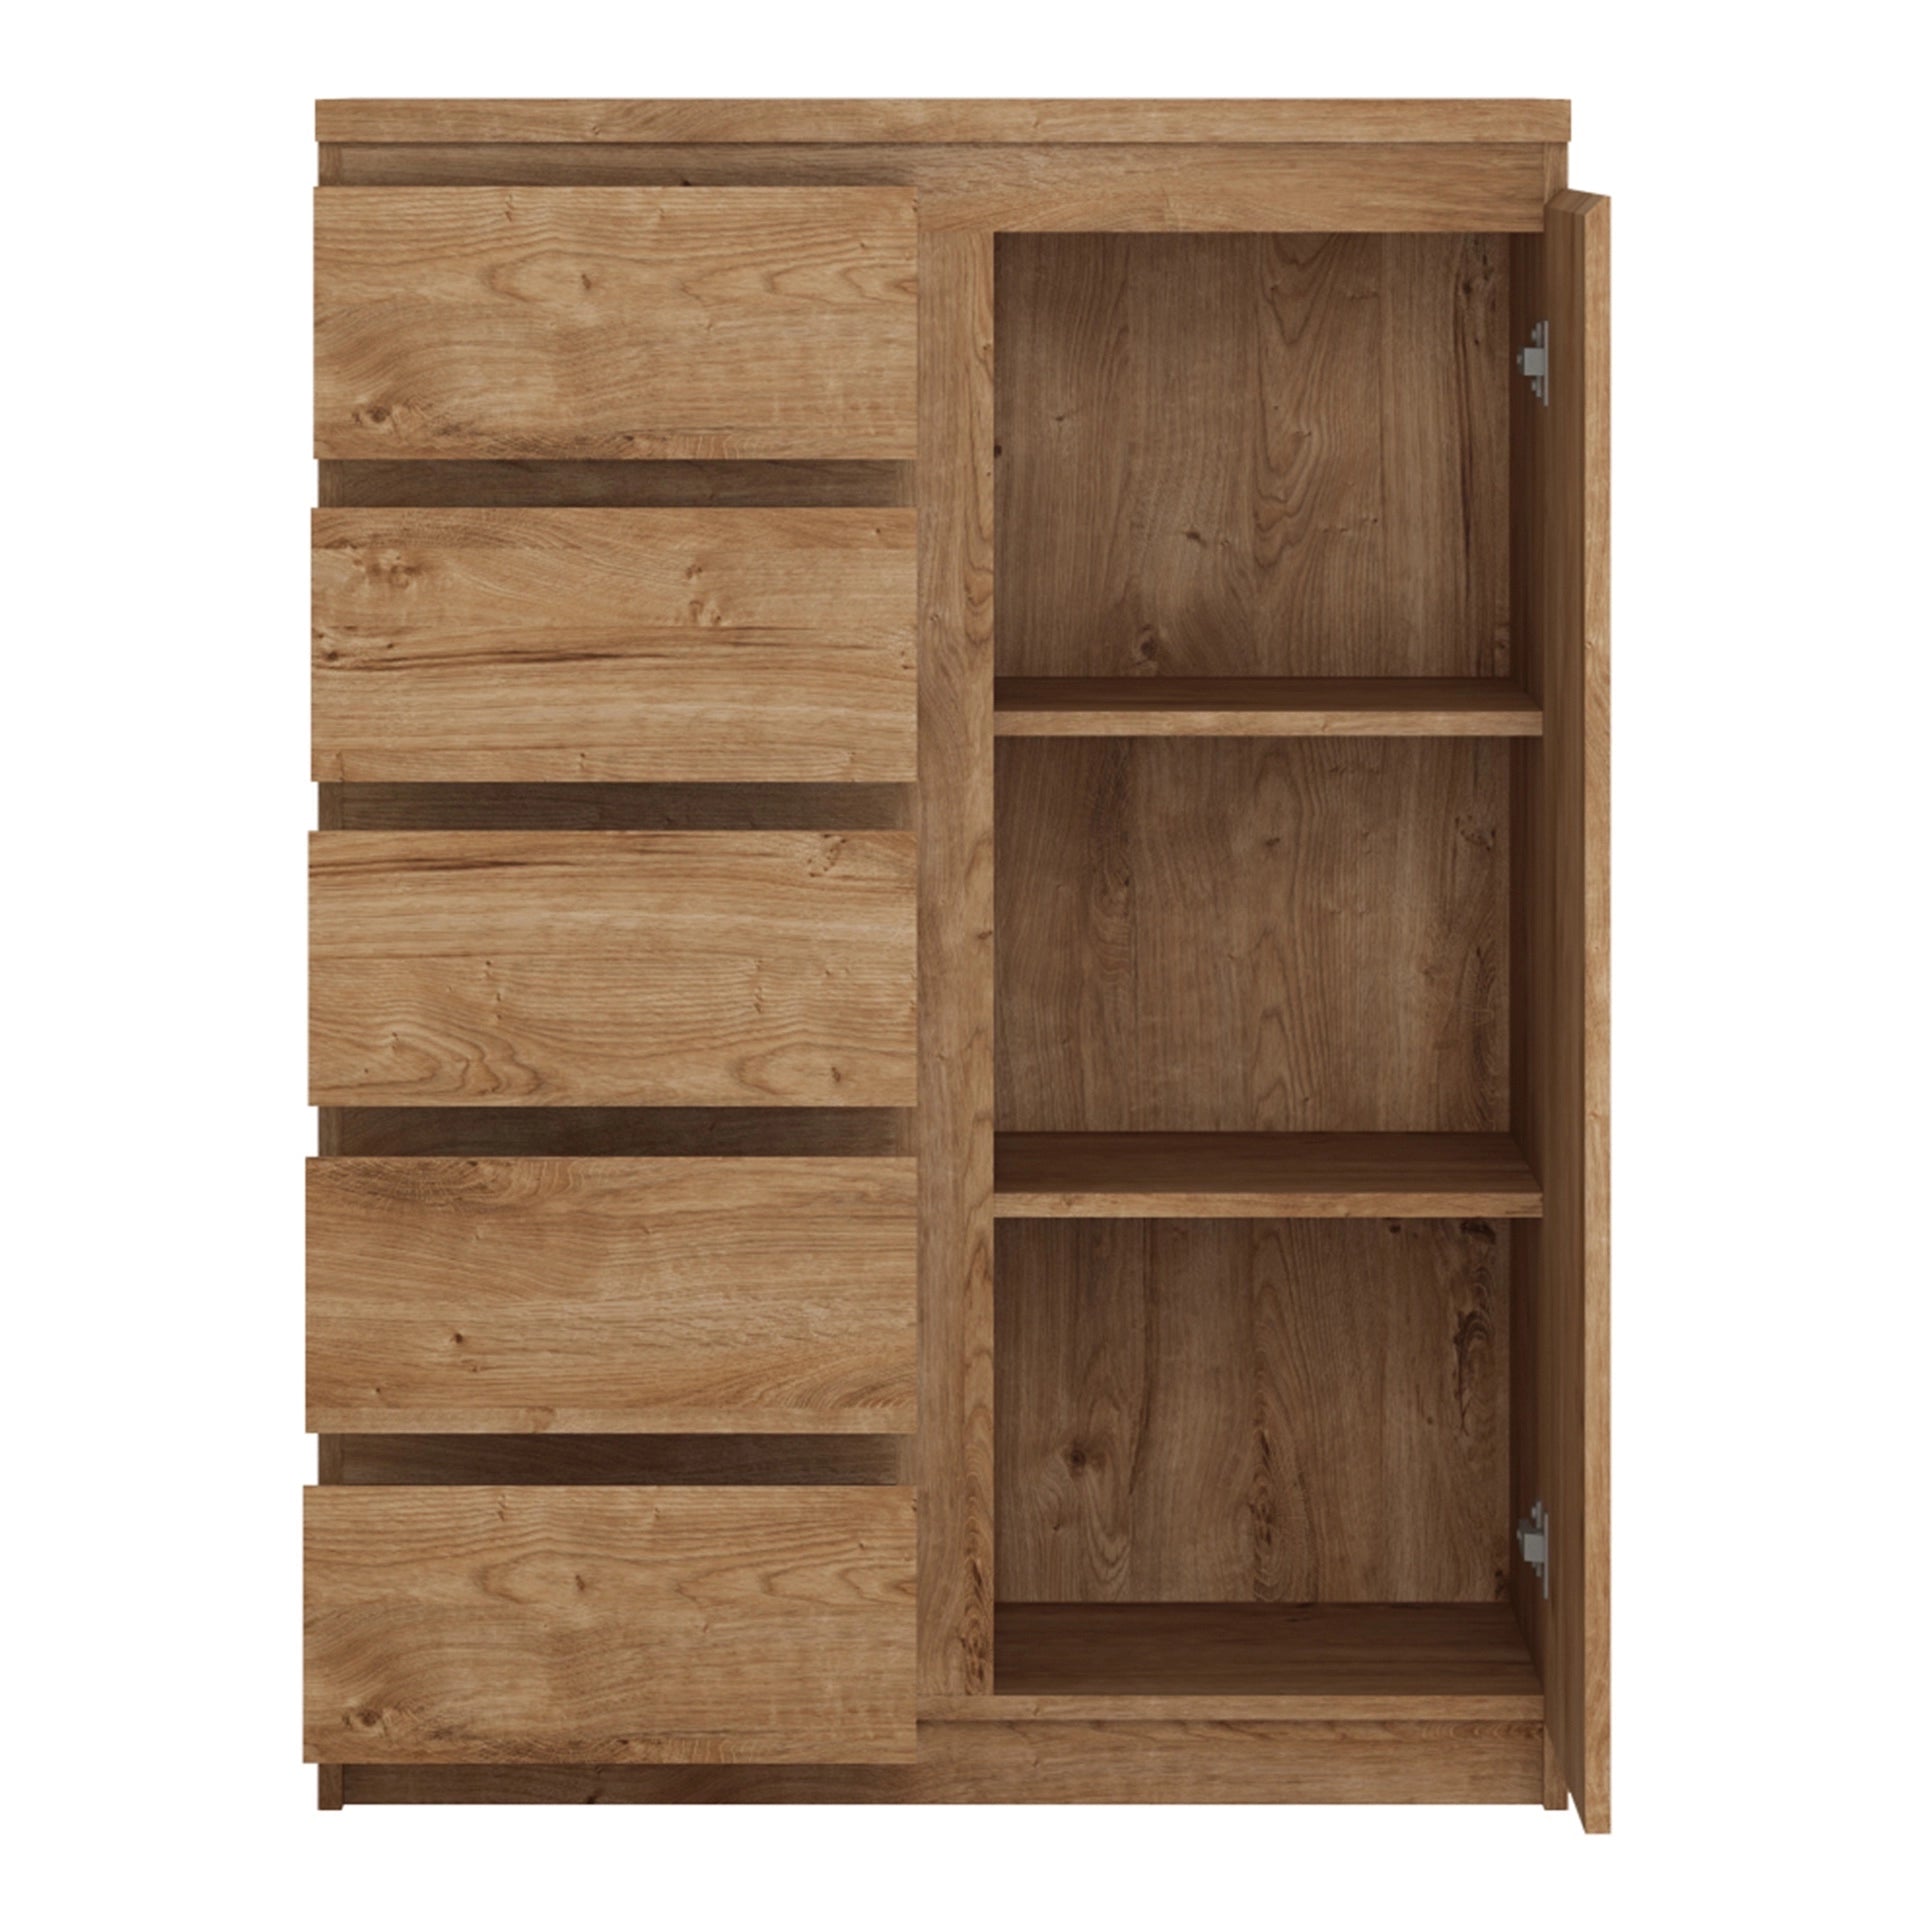 Furniture To Go Fribo 1 Door 5 Drawer Cabinet in Oak